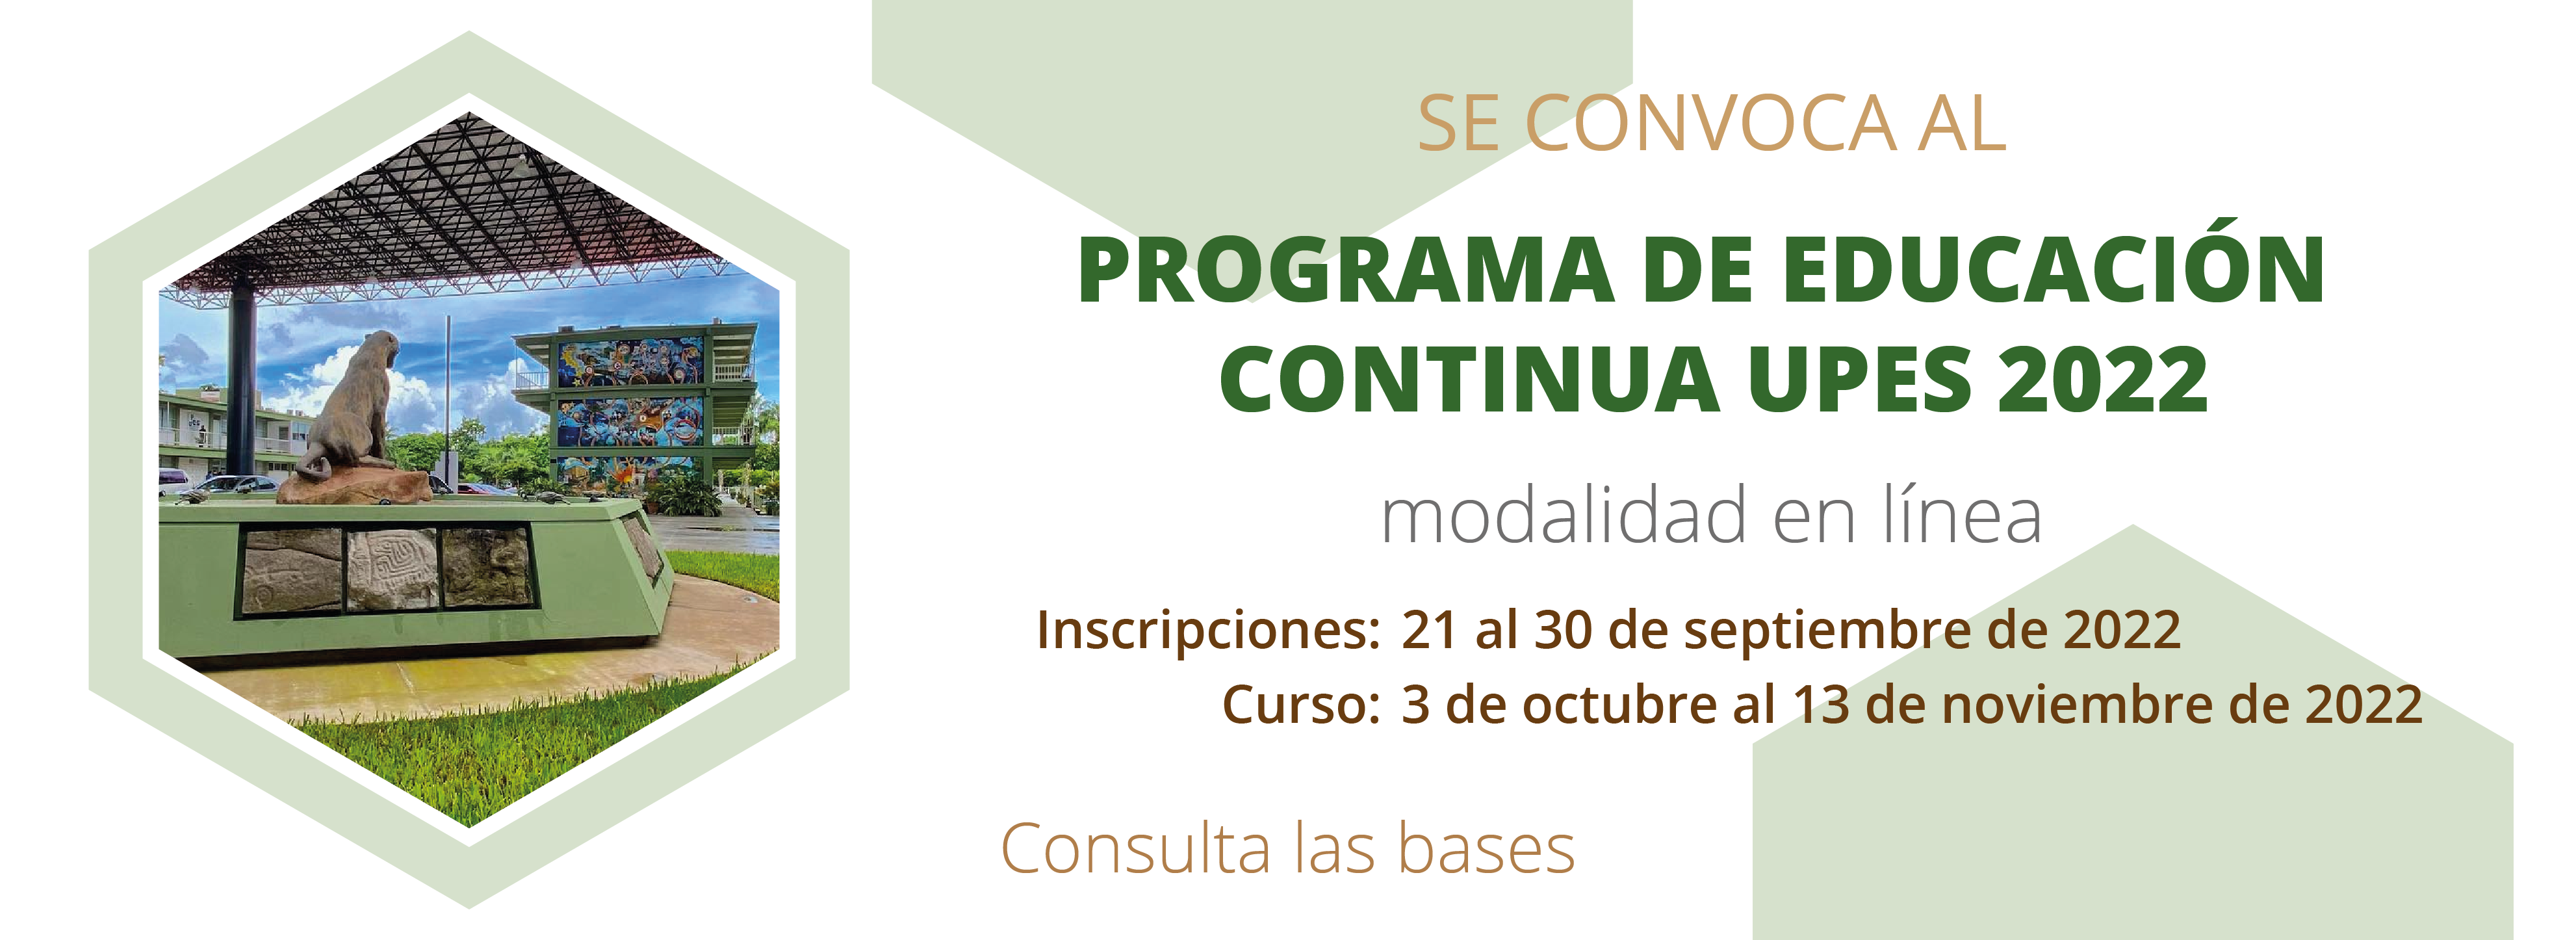 Convocatoria_Programa_de_Educacion_Continua_banner_web_1